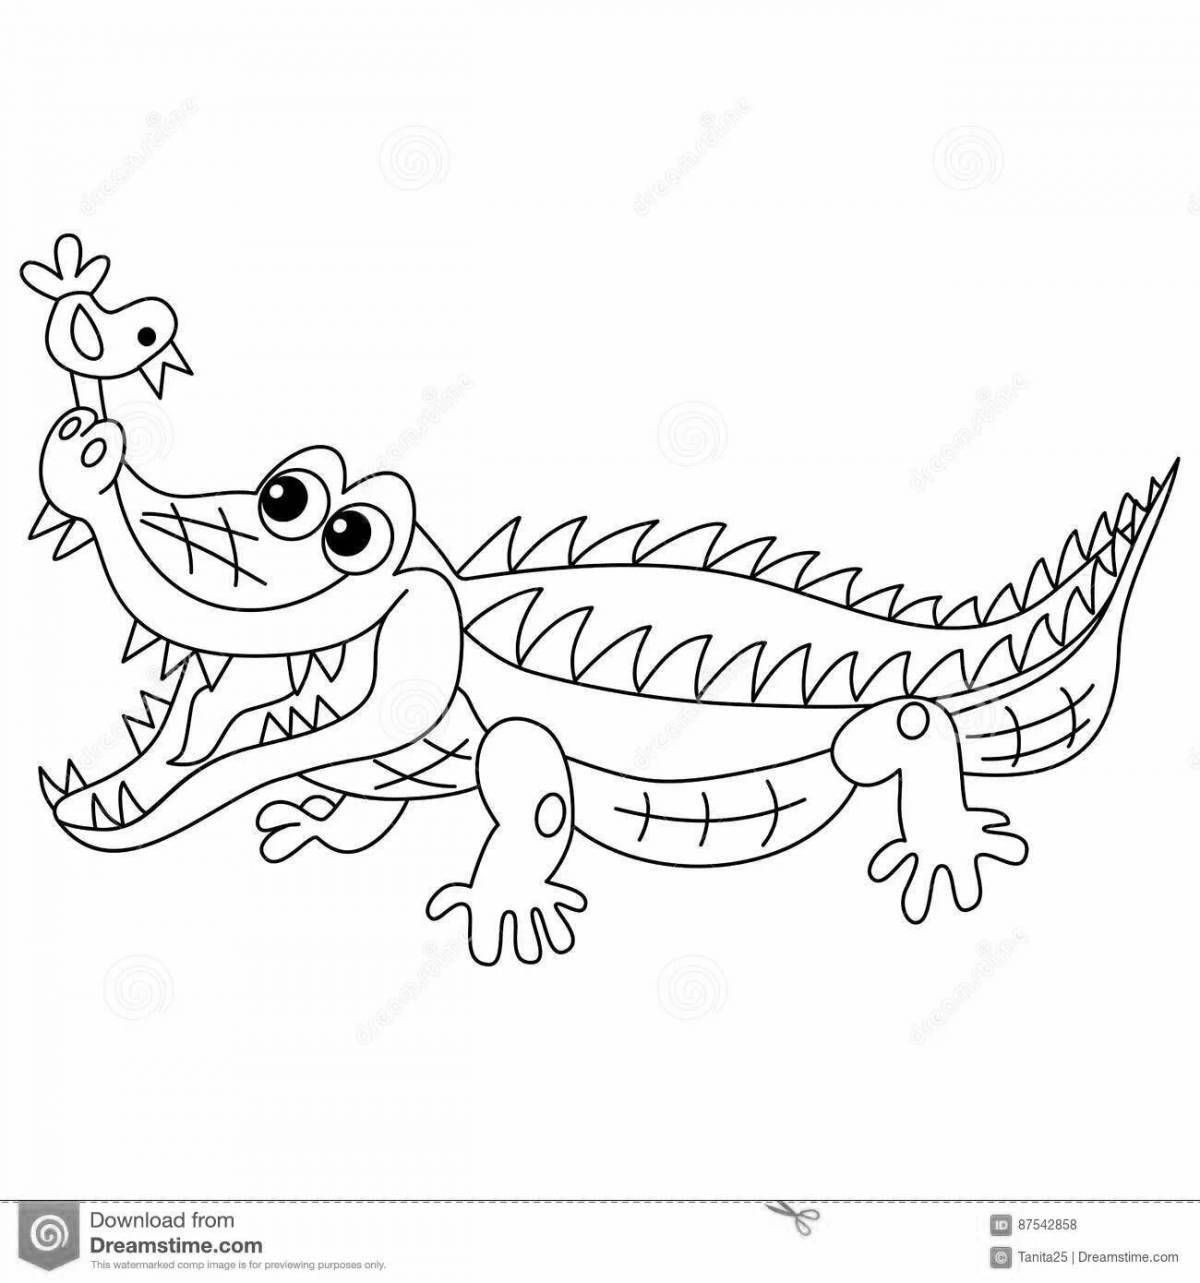 Live crocodile coloring antistress